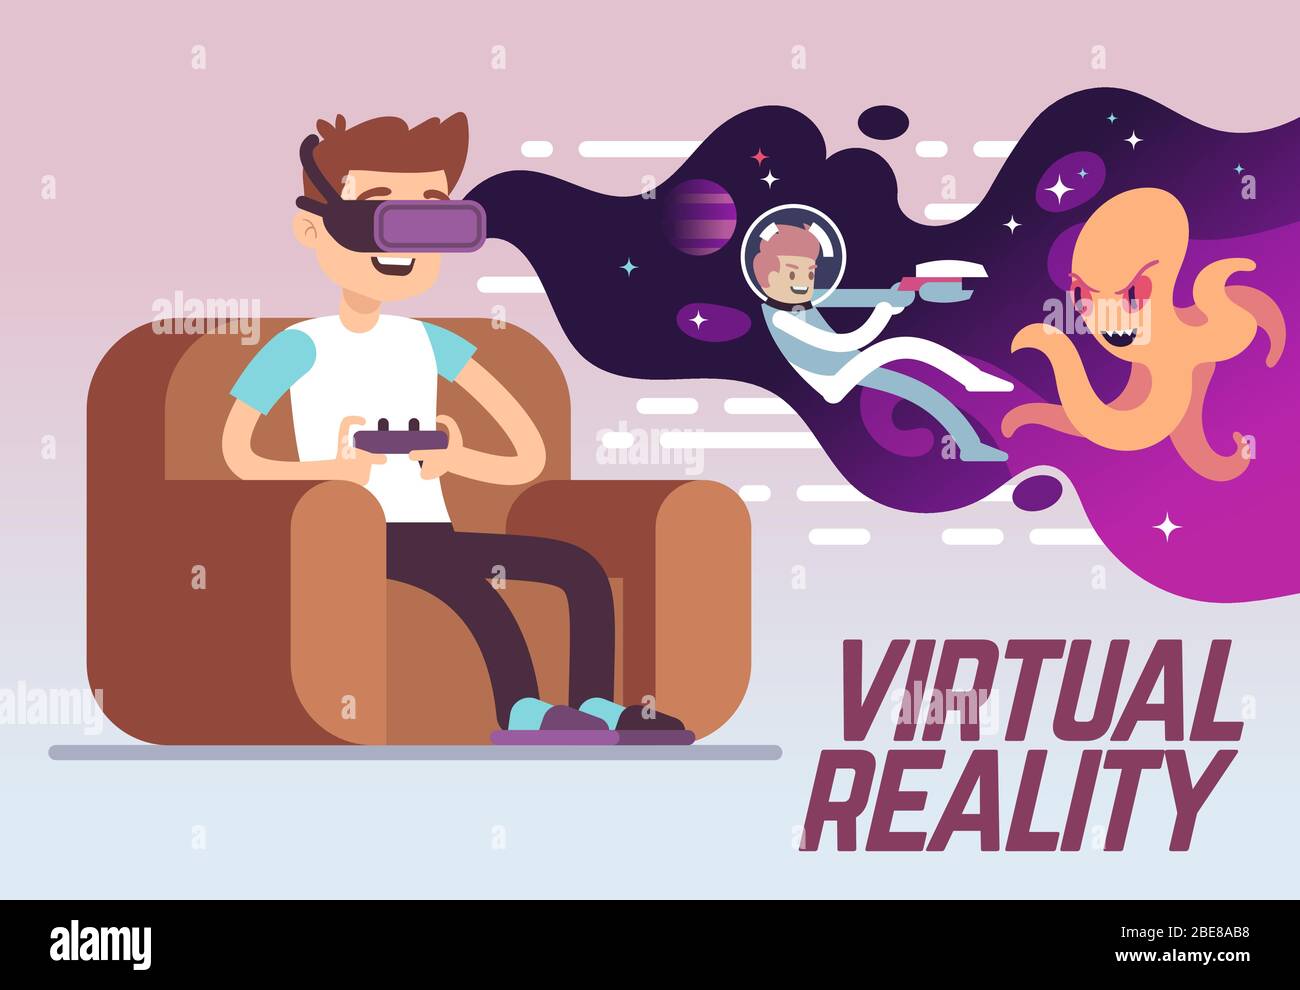 Junge mit Headset spielen virtuelle 3d-Realität-Simulation Spiel. Digitales Entertainment-Vektorkonzept. Innovation Play-Gerät, Illustration des vr Cyberspace Stock Vektor